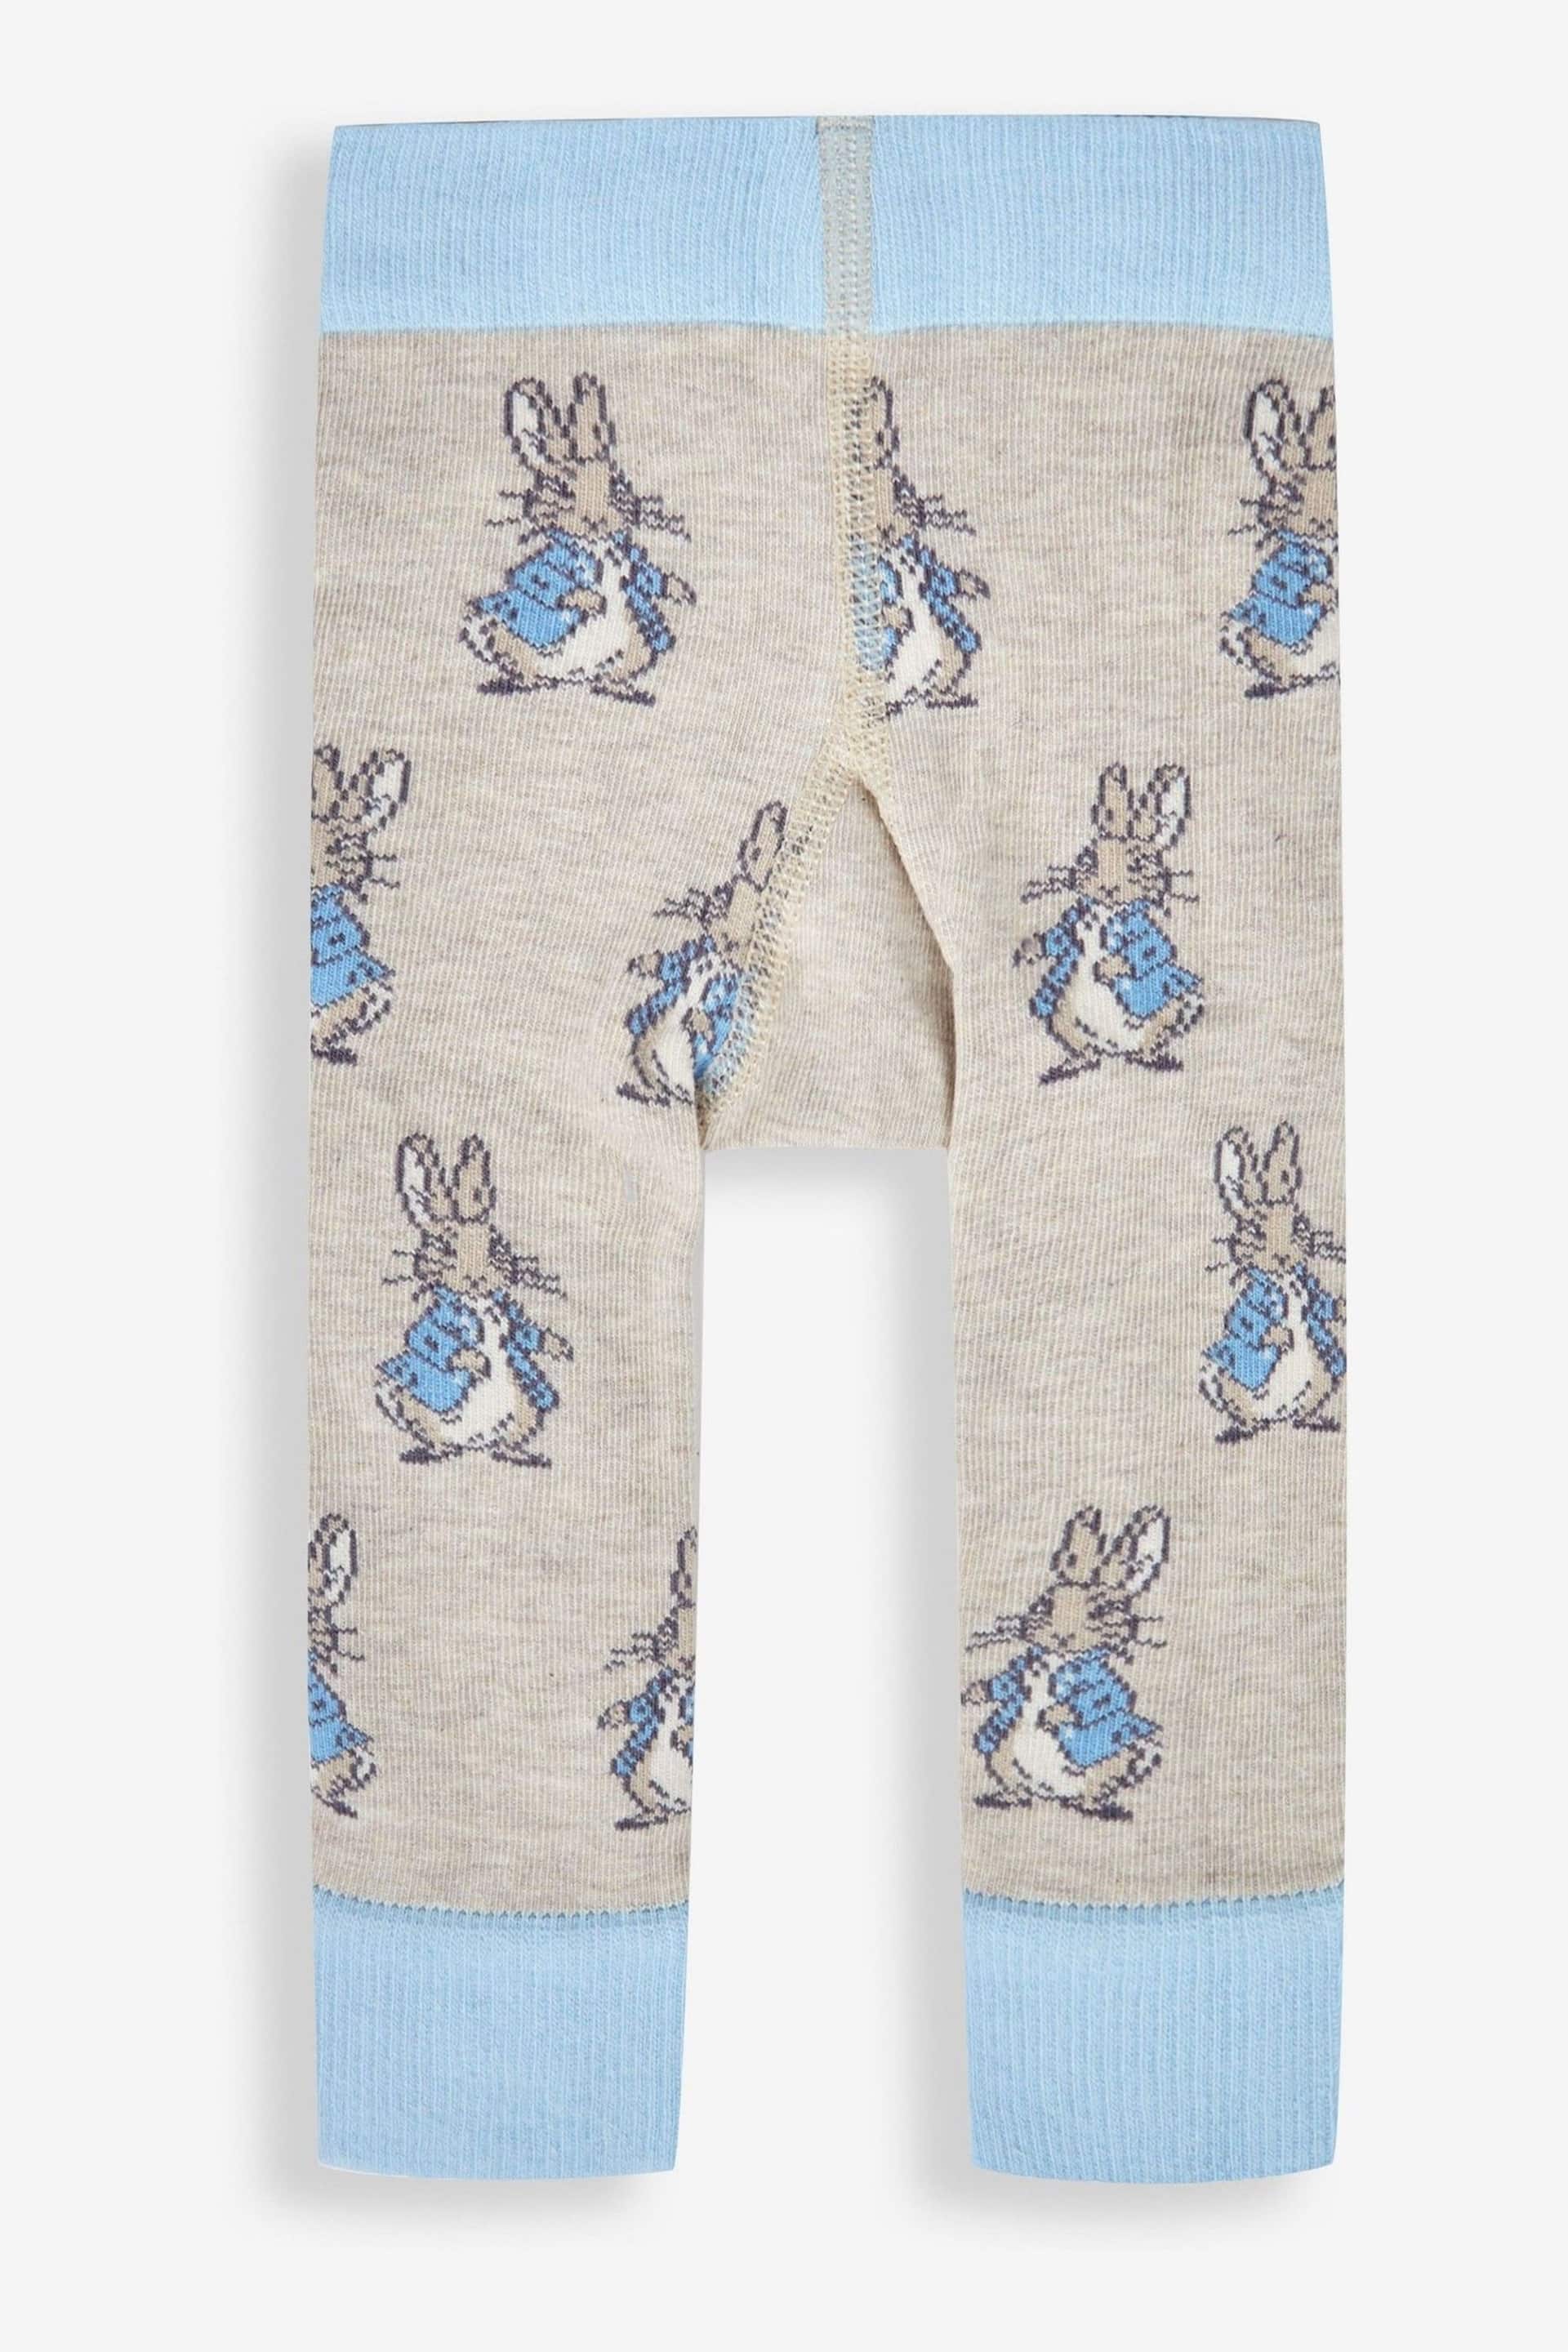 JoJo Maman Bébé Blue Peter Rabbit Leggings - Image 4 of 5